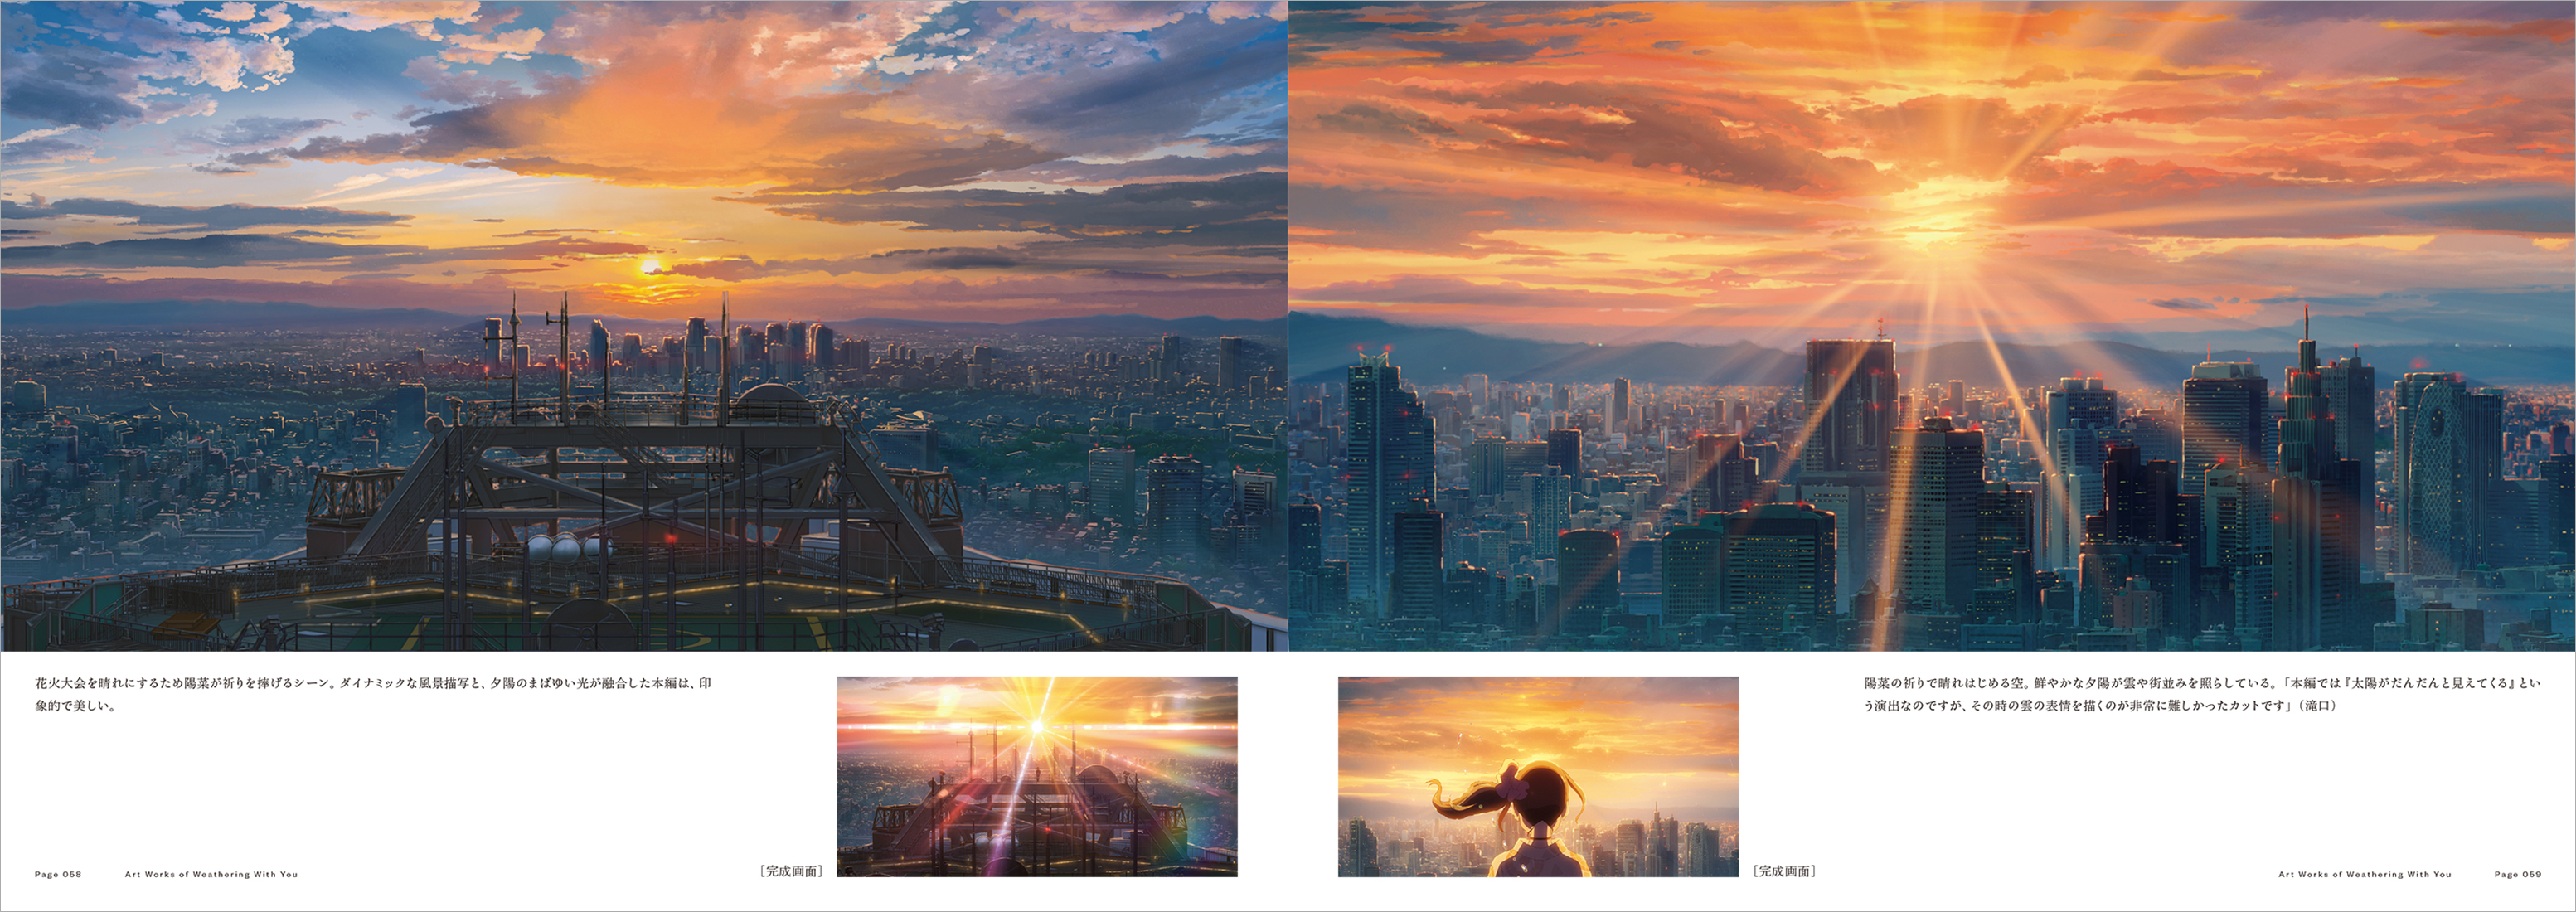 Weathering With You art book free wallpapers video conference call  backgrounds Makoto Shinkai Your Name Japanese anime Japan news 6 |  SoraNews24 -Japan News-